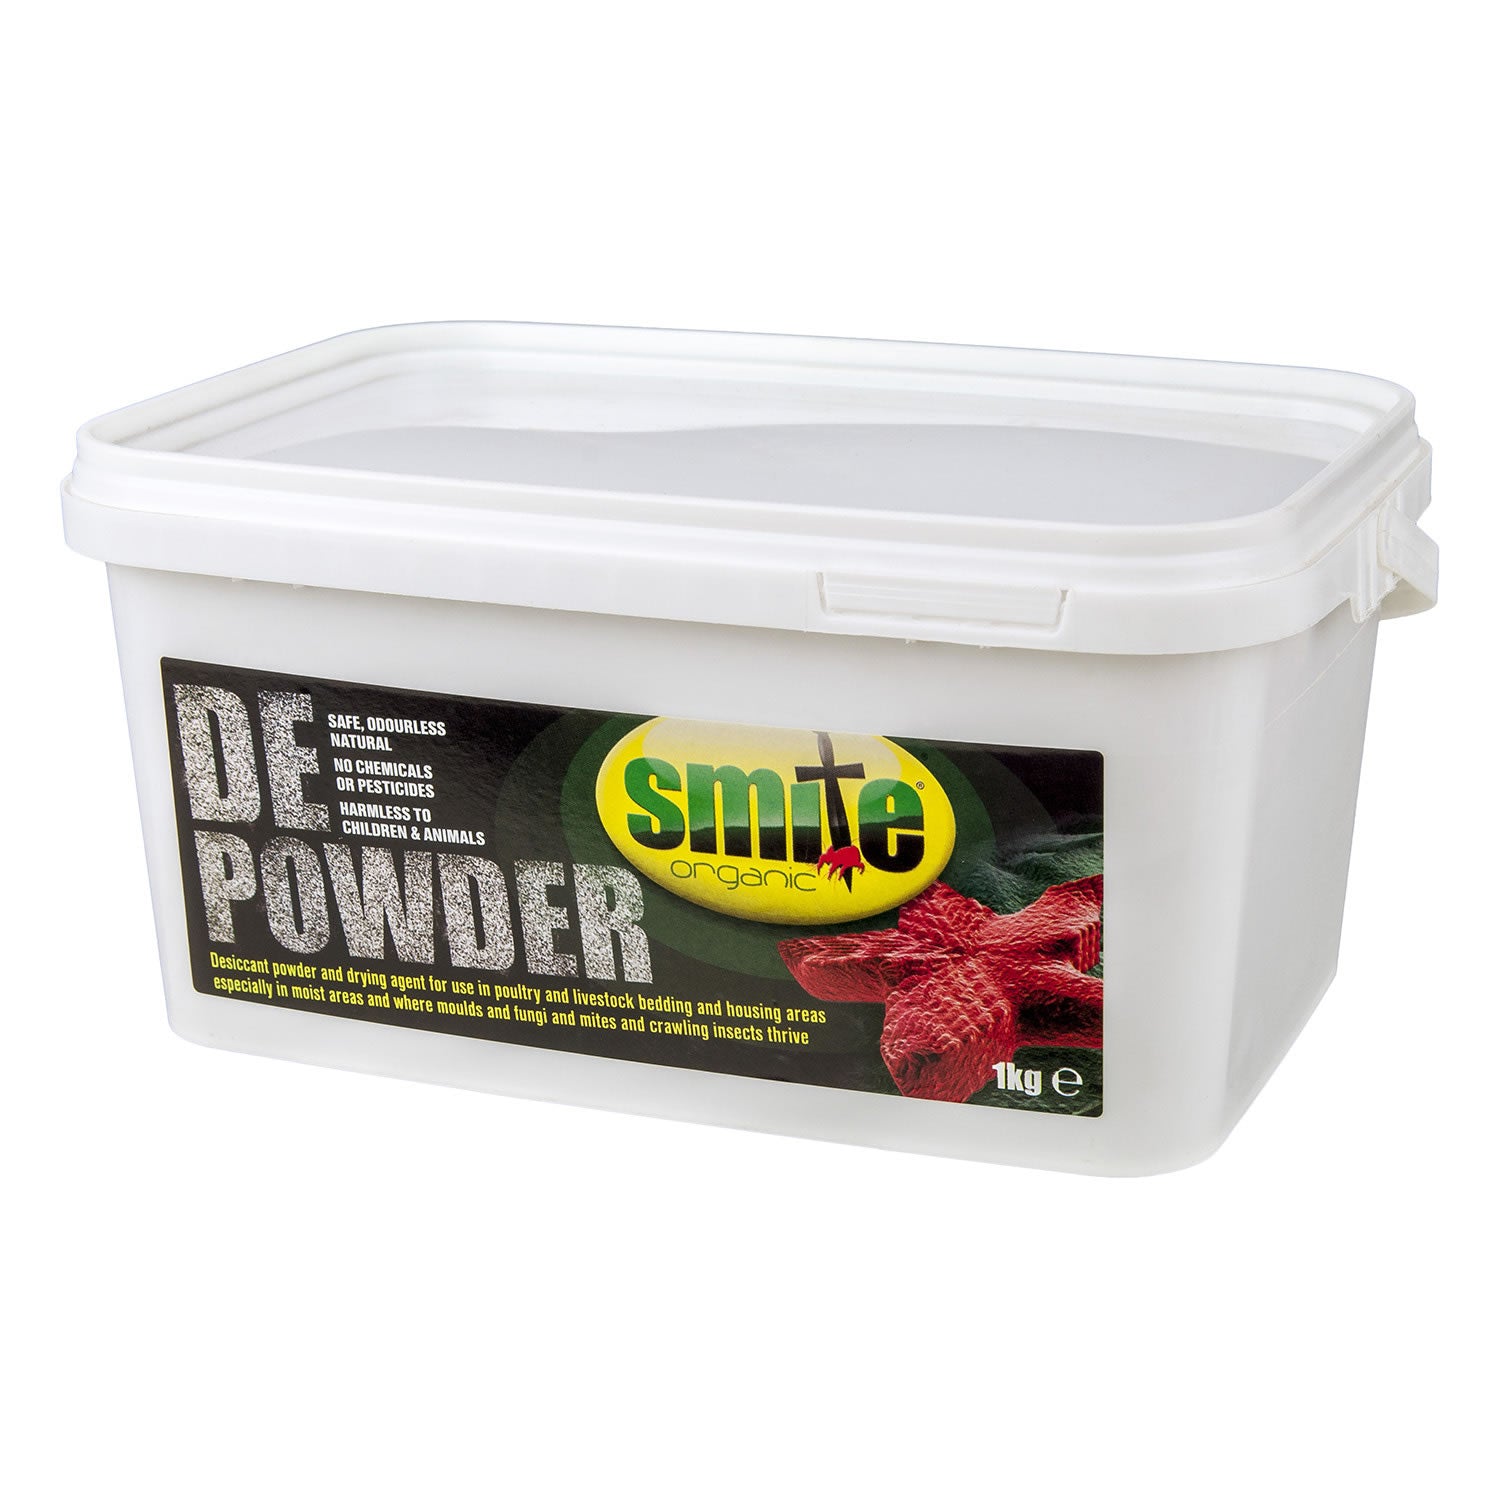 Smite Organic De Powder- Various Sizings